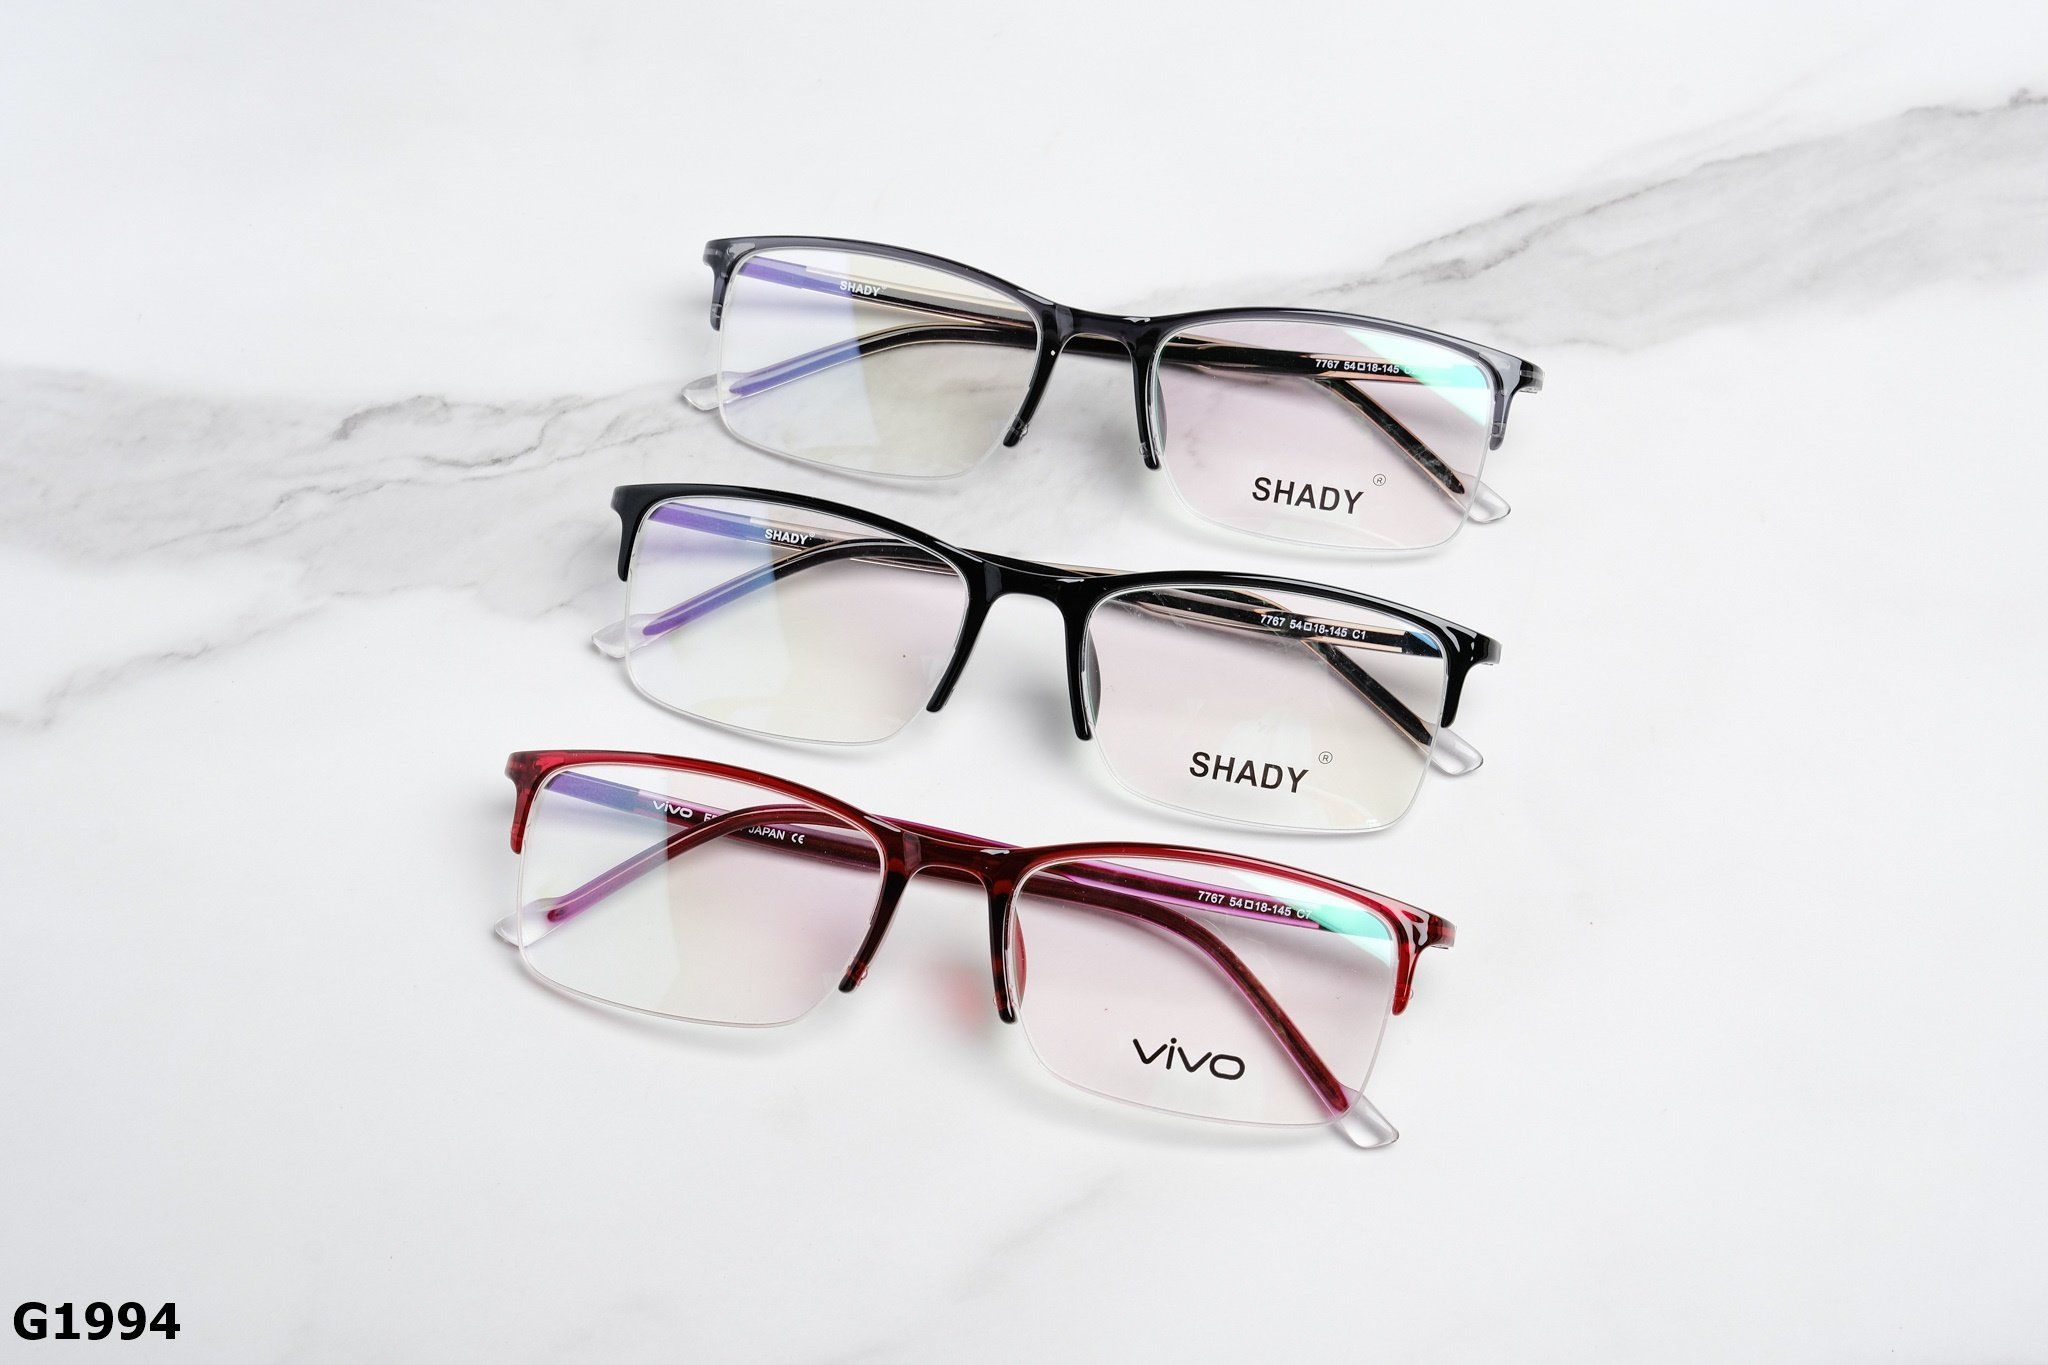  SHADY Eyewear - Glasses - G1994 